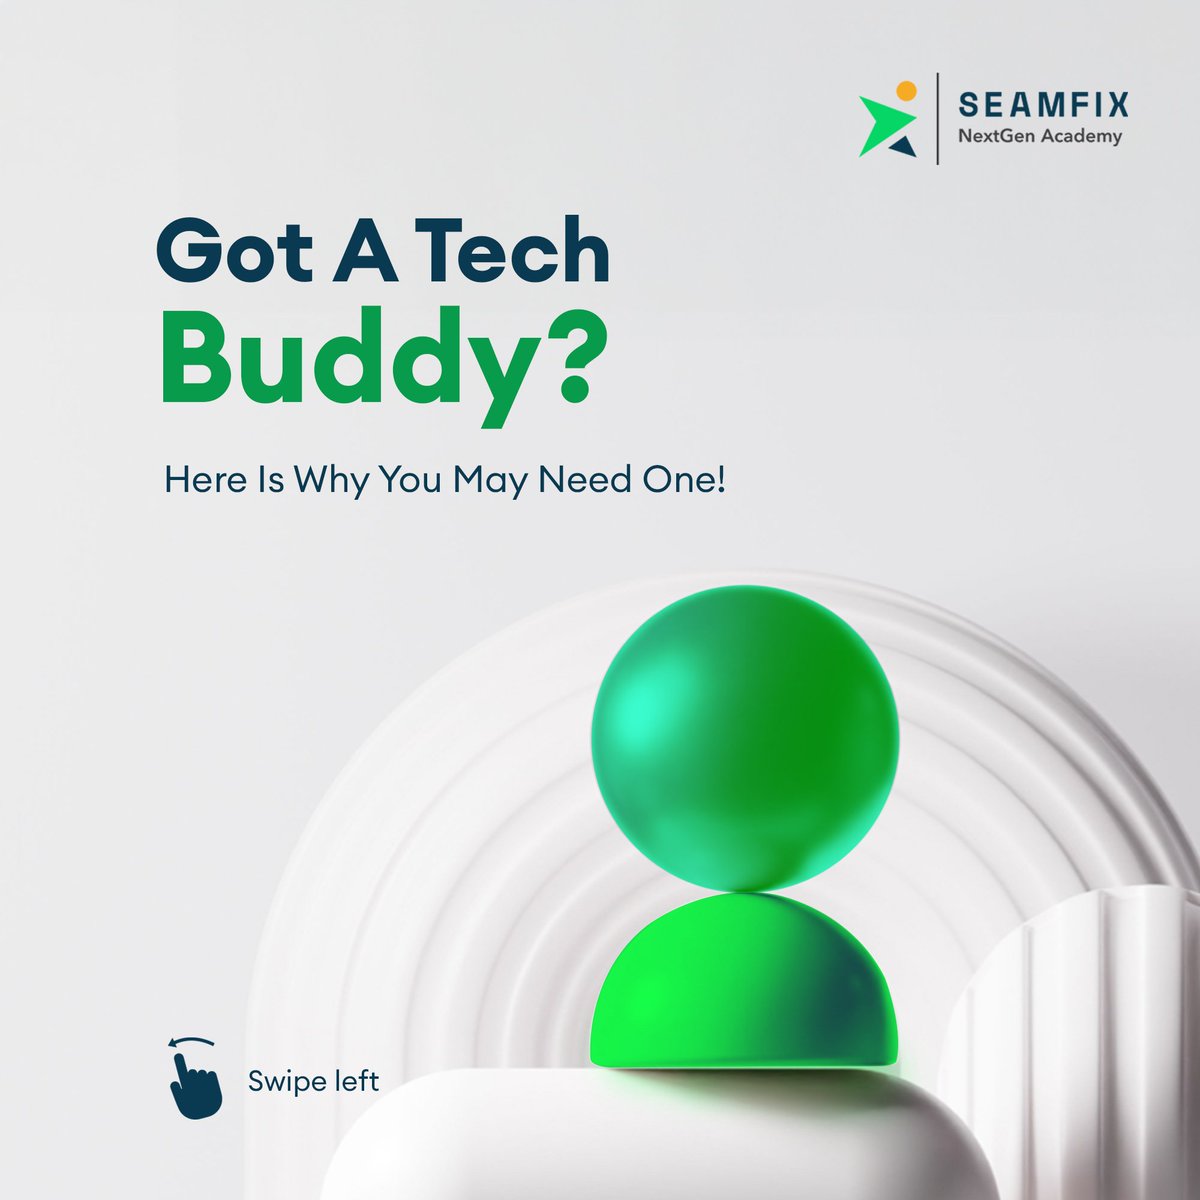 Got a tech buddy? Here is why you need one! 

Follow the thread...

#TechBuddies #TechJourney #Networking #LearningCommunity #SeamfixNextGen #NextGenAcademy